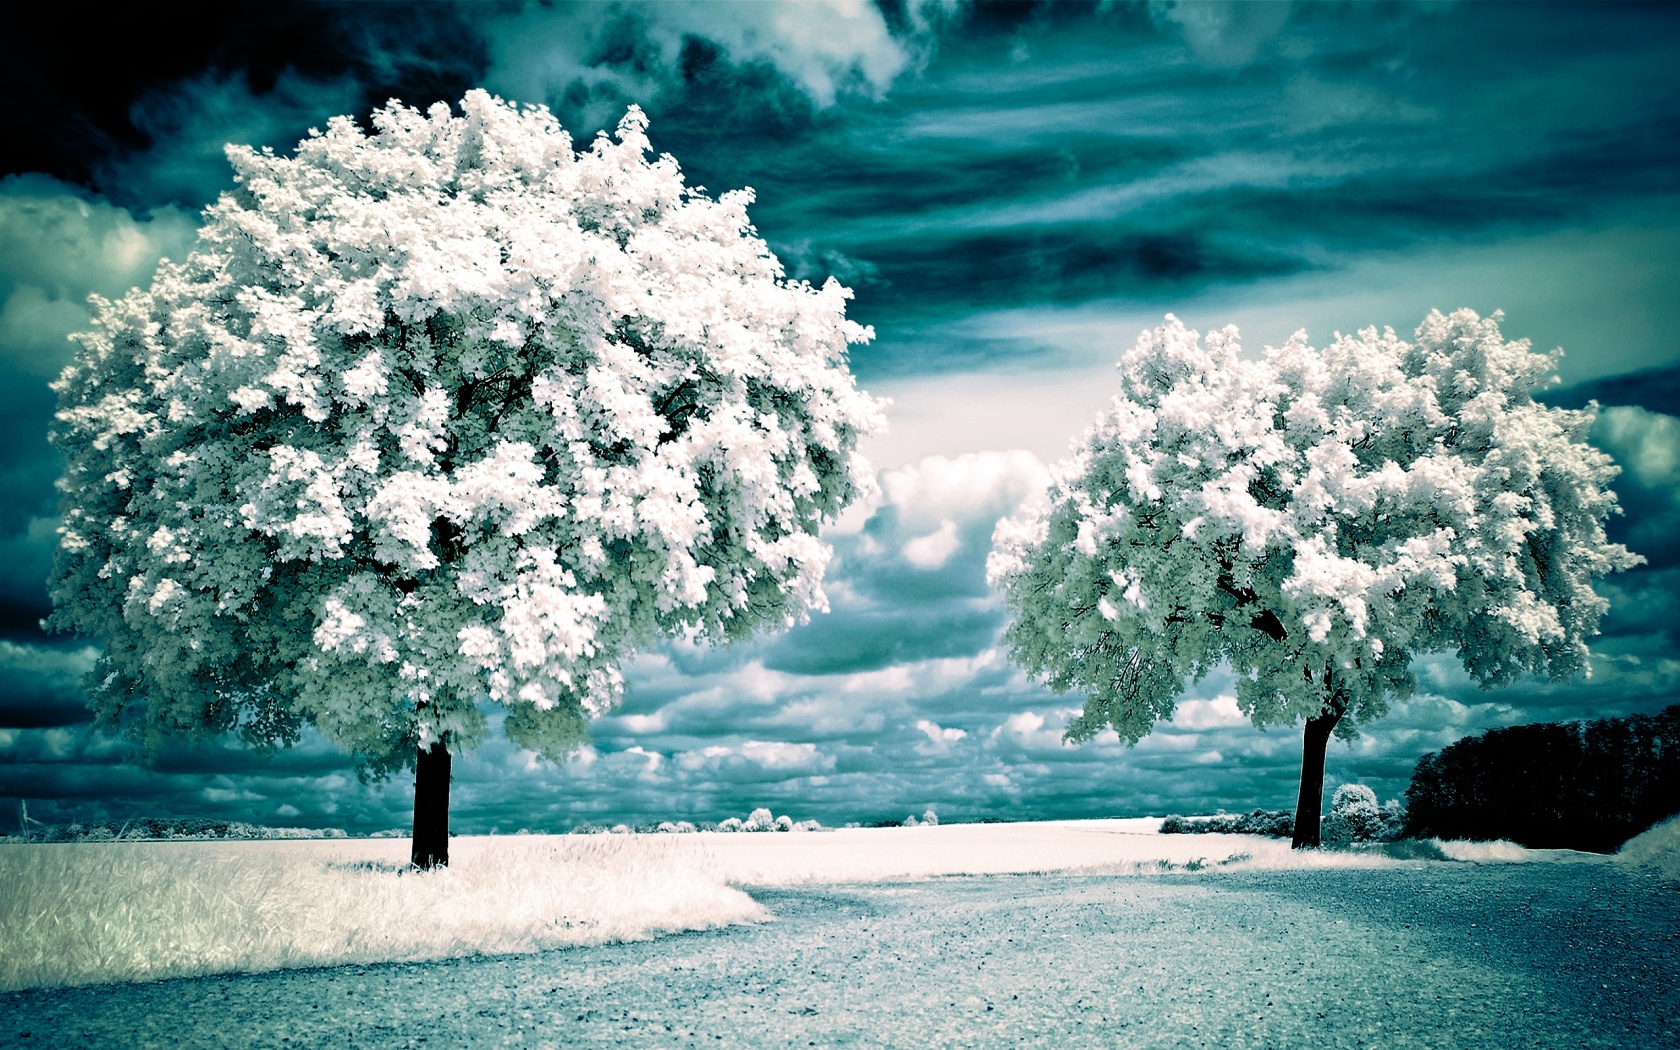 Nature Winter Landscapes